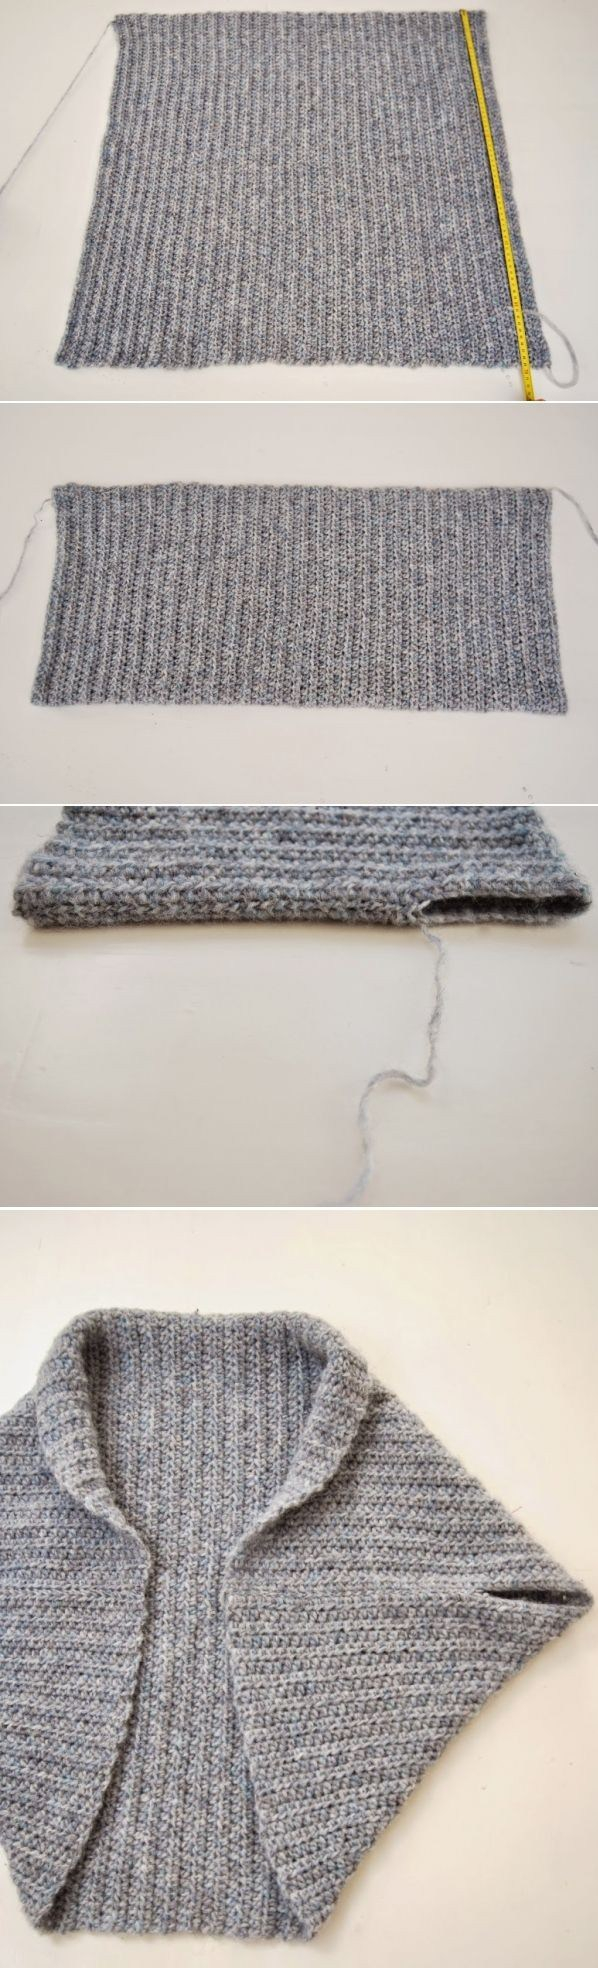 Knit Shrug Pattern Easy Easy Shrug Knitting Patterns In The Loop Knitting